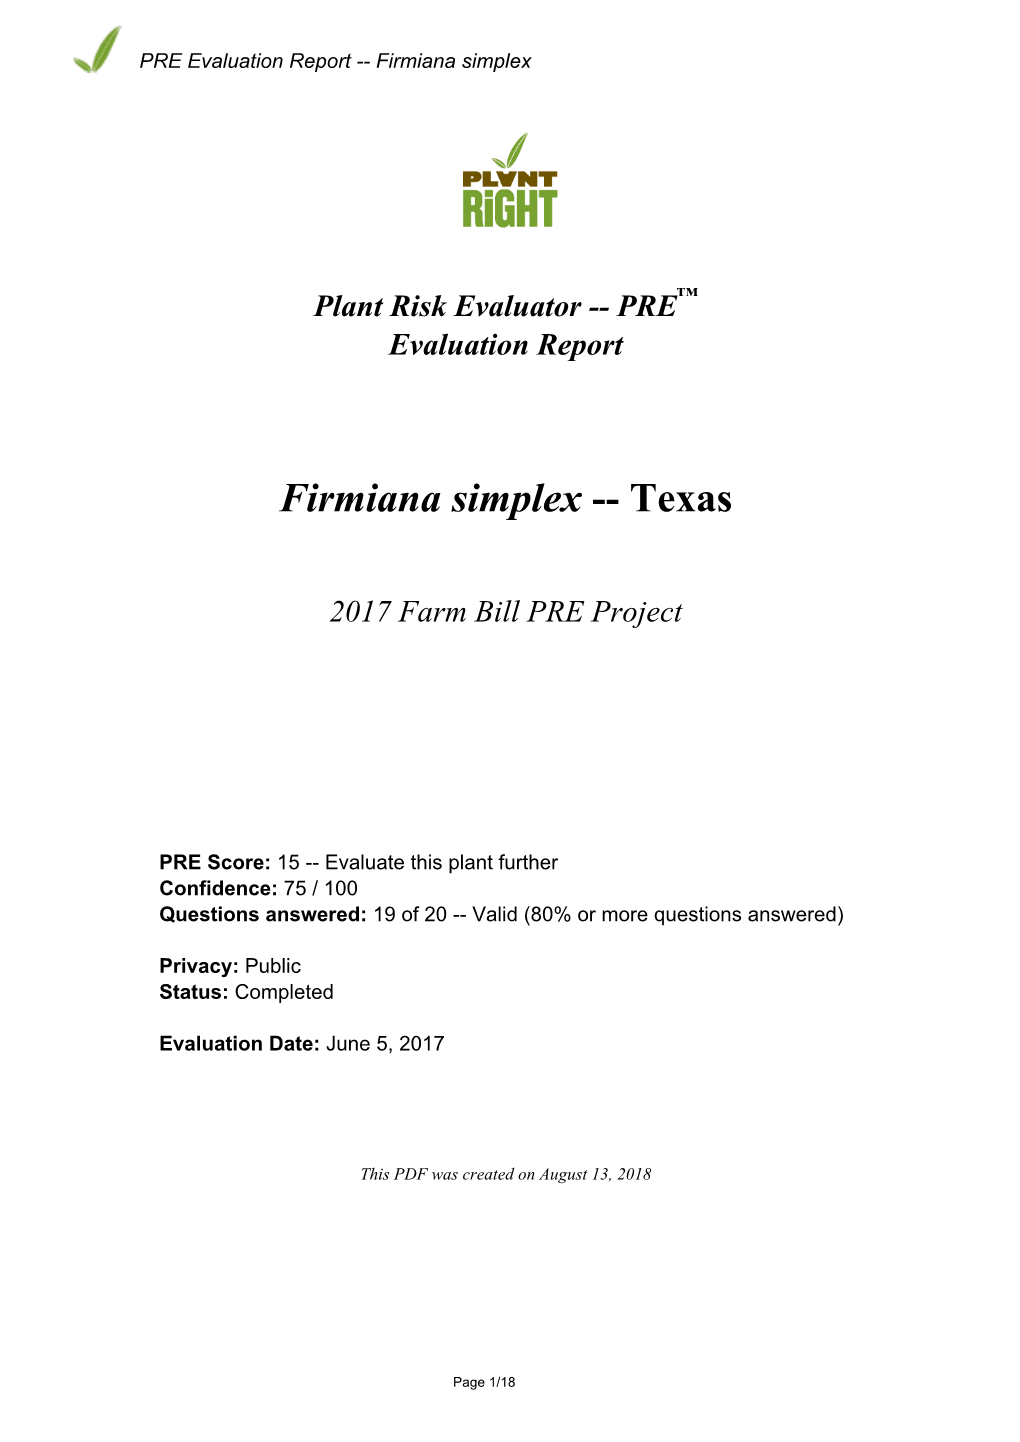 PRE Evaluation Report for Firmiana Simplex